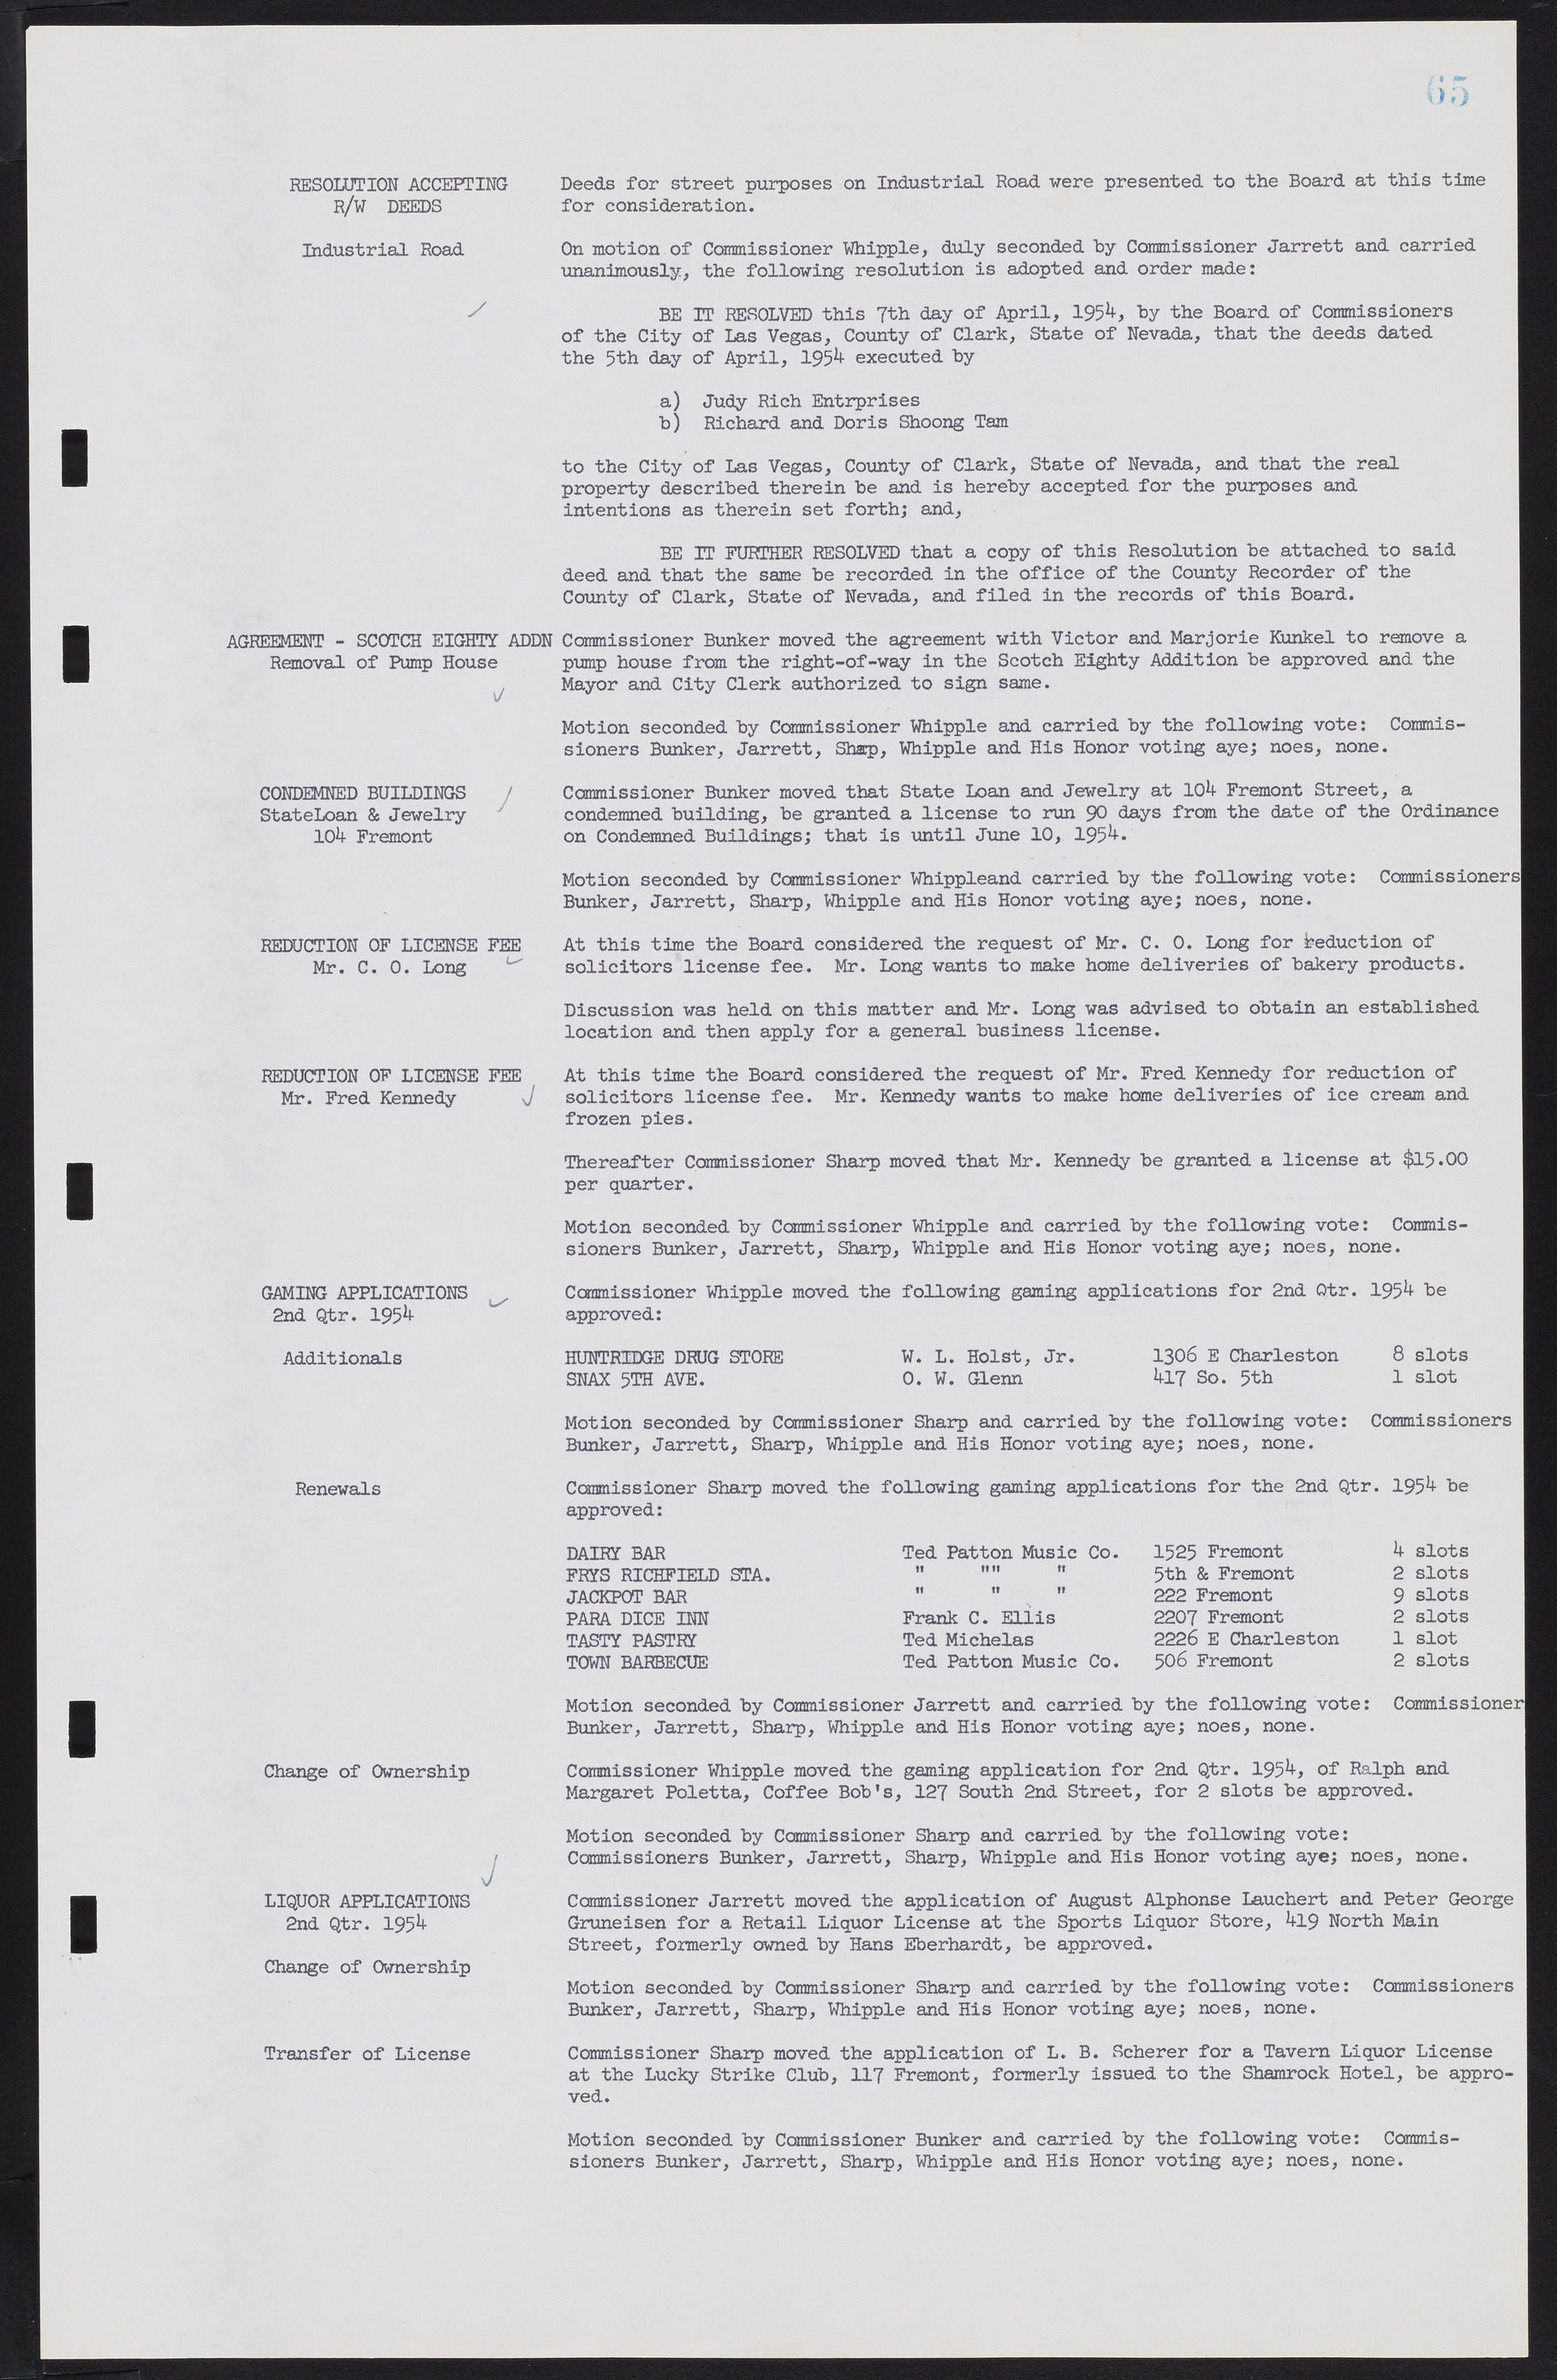 Las Vegas City Commission Minutes, February 17, 1954 to September 21, 1955, lvc000009-69